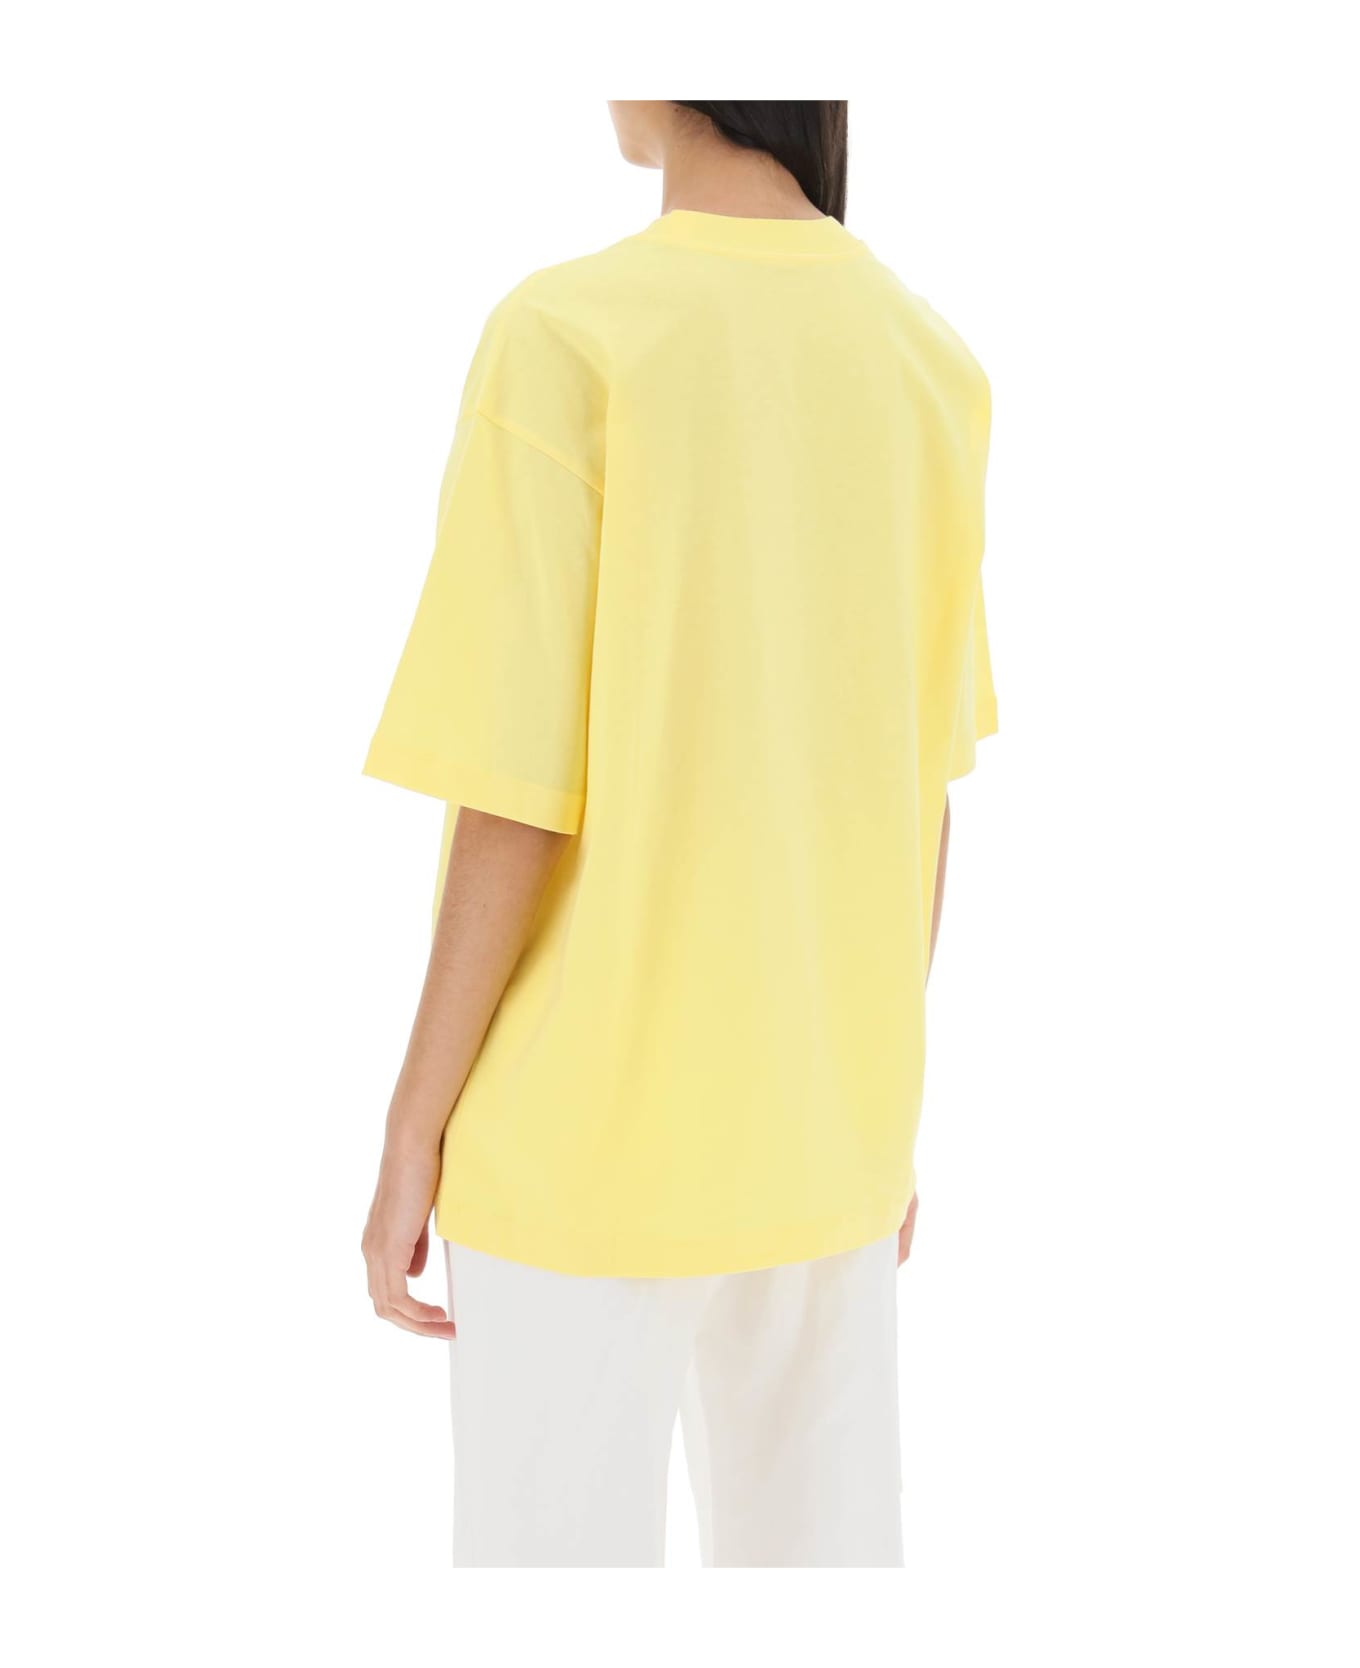 Marni Logo T-shirt - Yellow Tシャツ